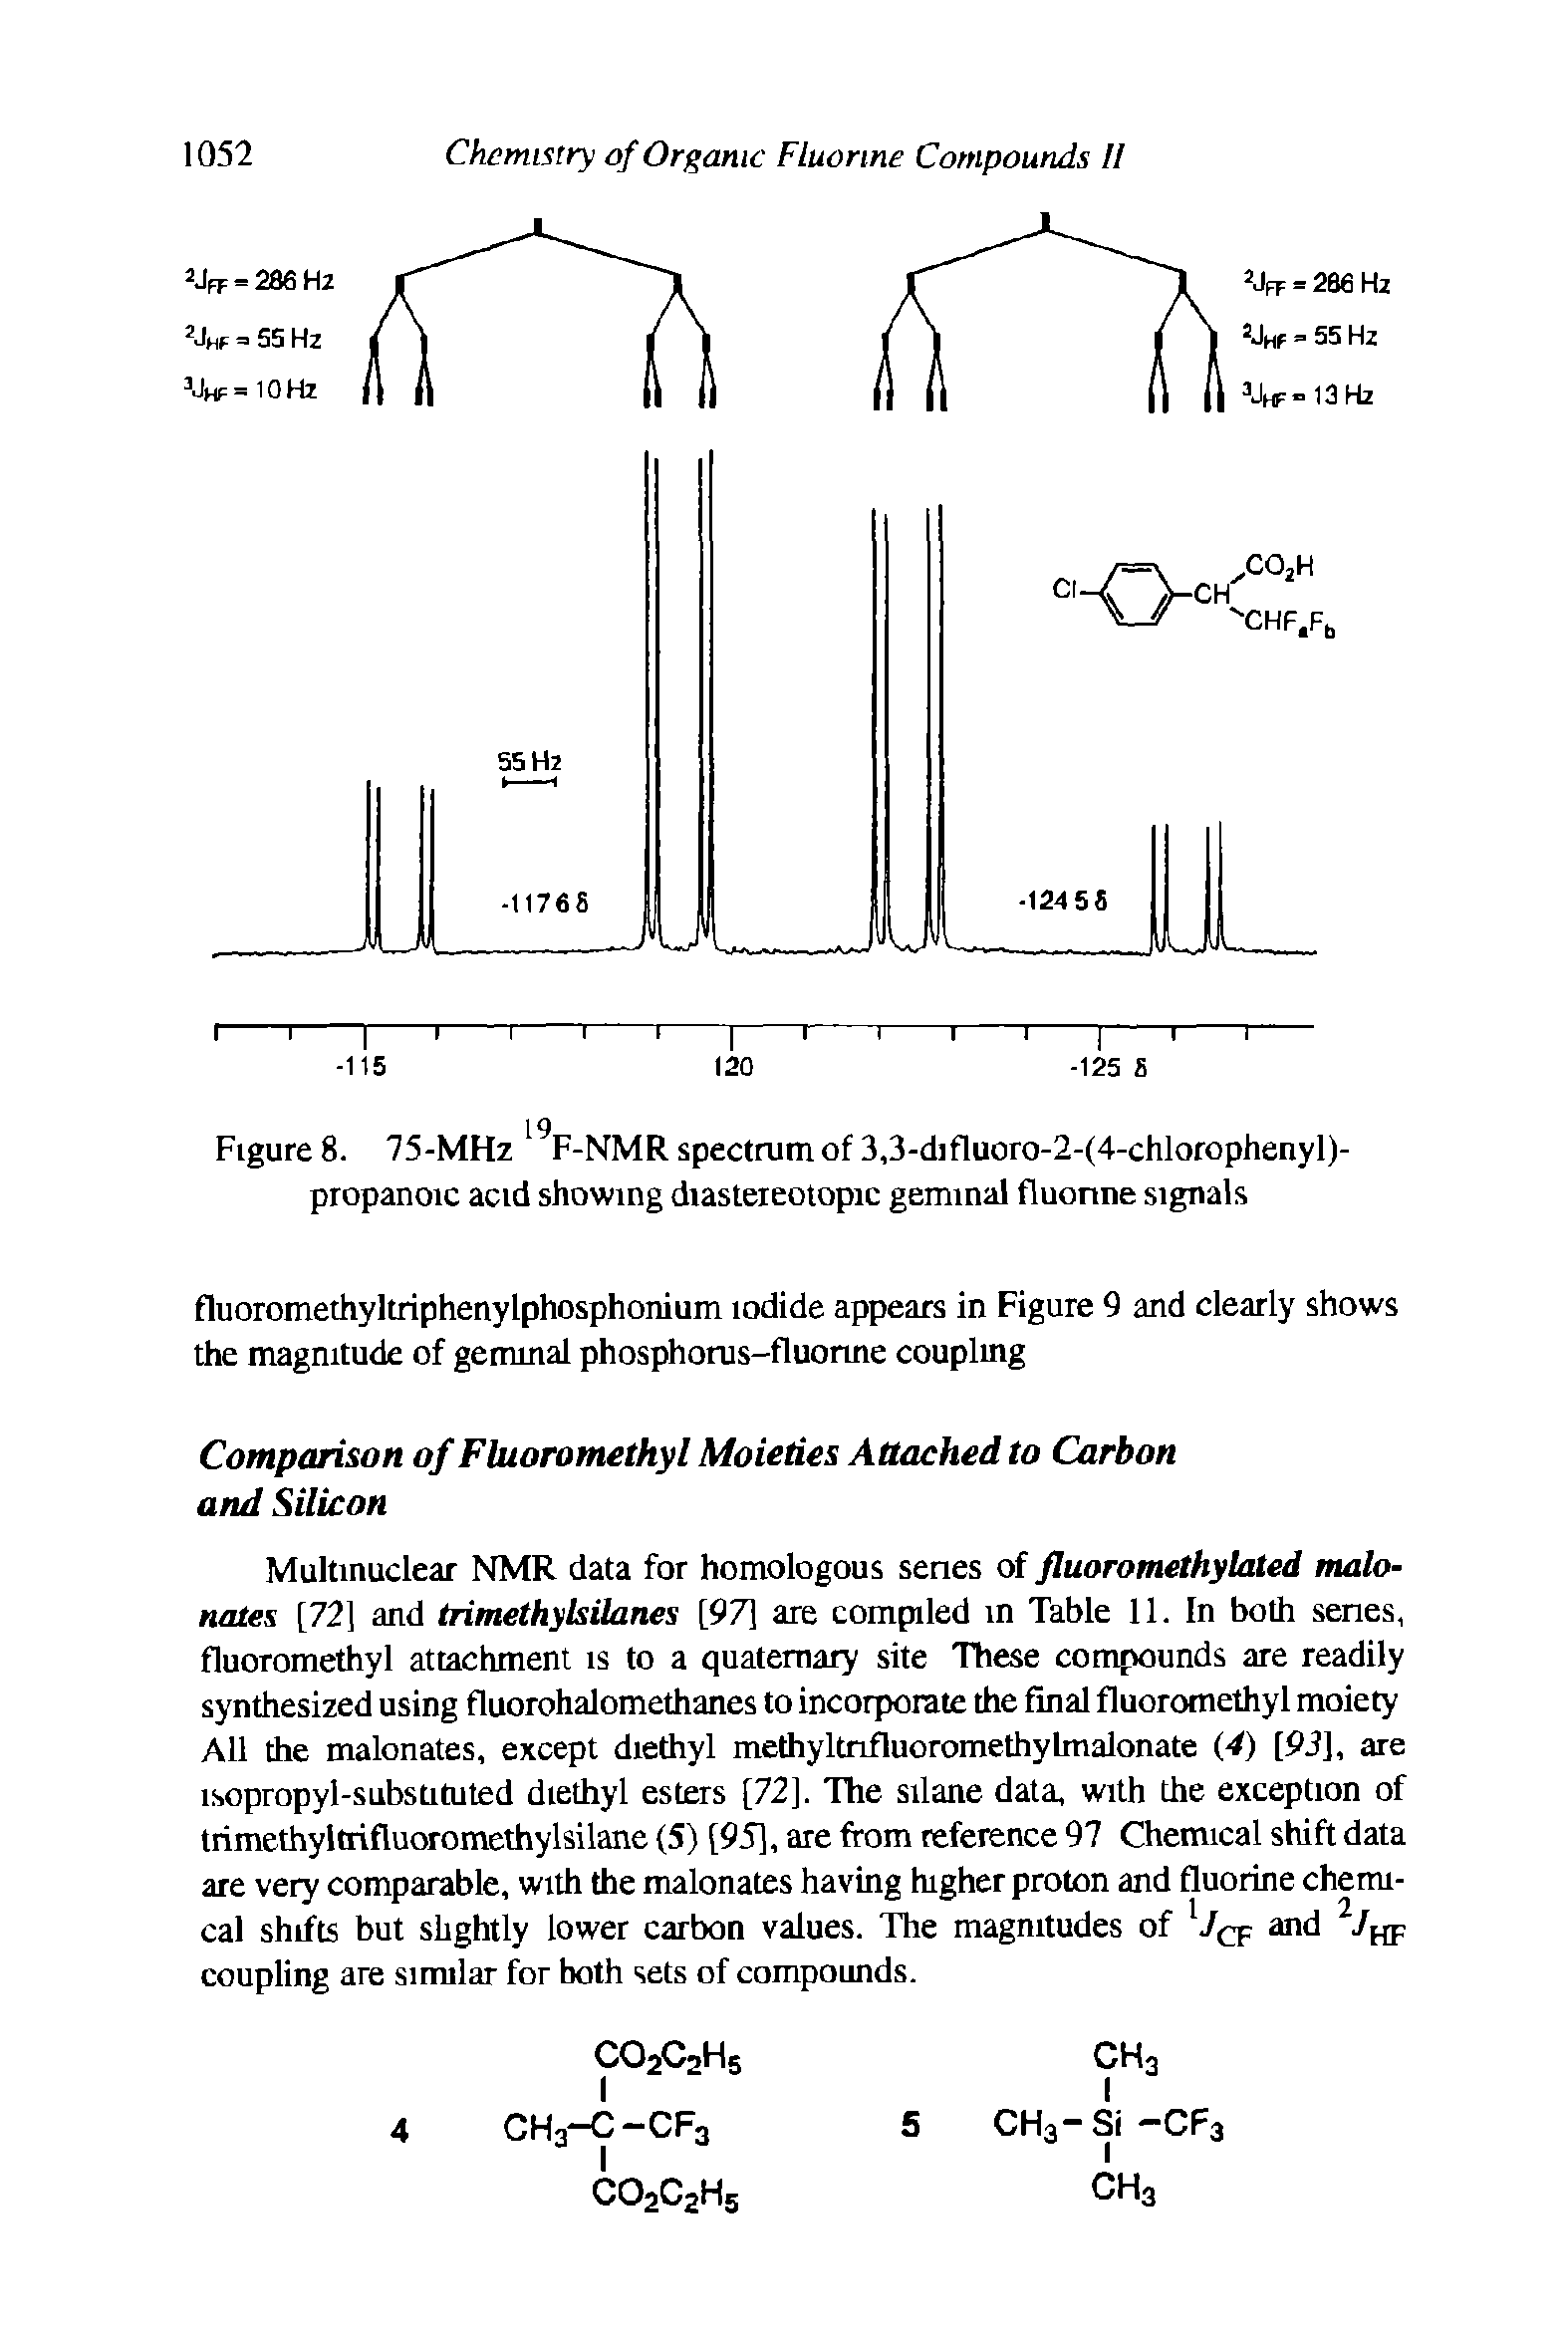 Figures. 75-MHz F-NMR spectrum of 3,3-difluoro-2-(4-chlorophenyl)-propanoic acid showing diasteieotopic geminal fluorine signals...